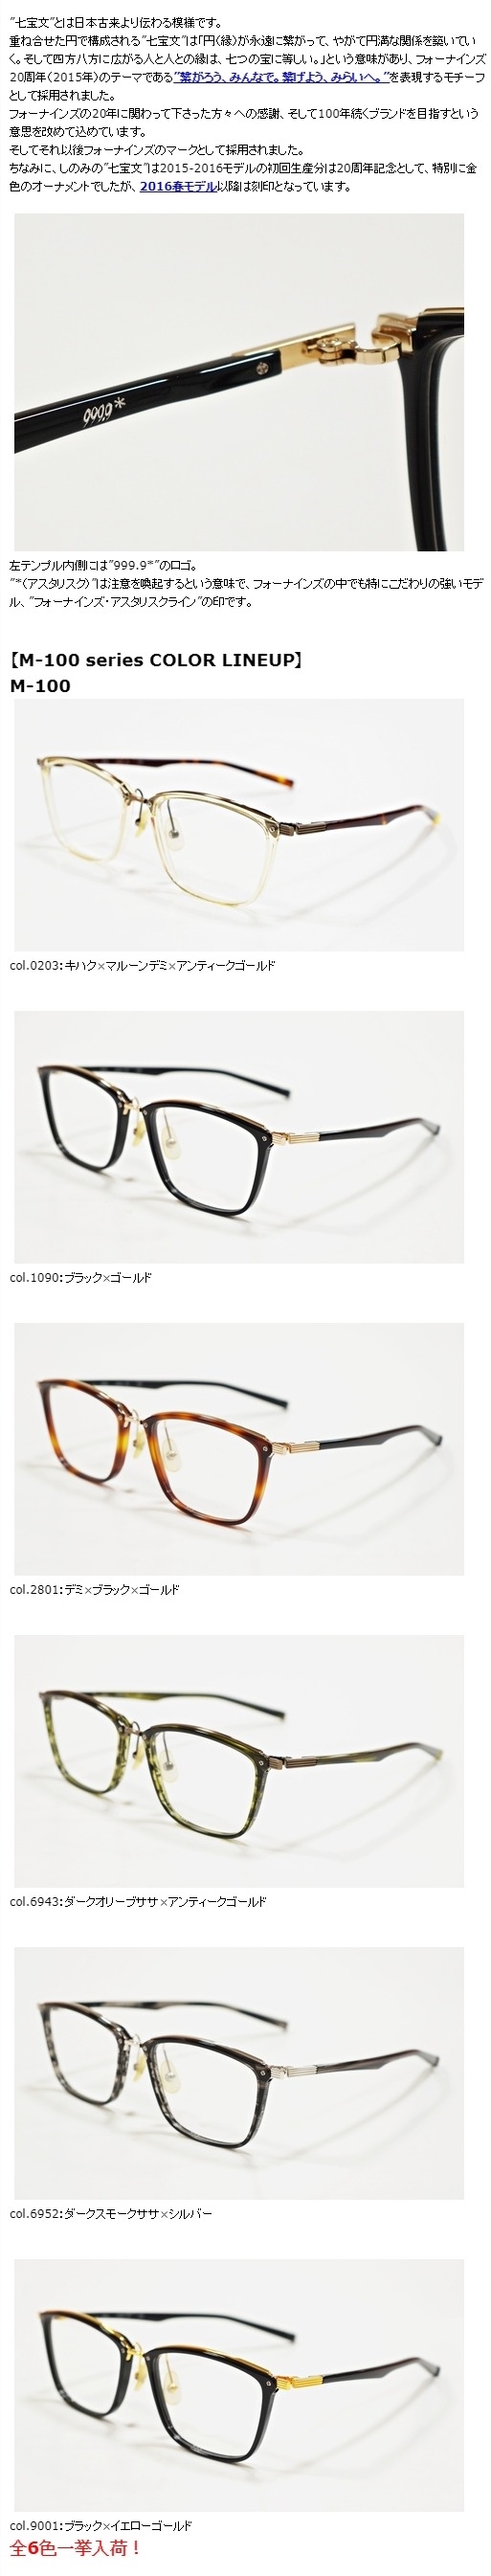 999.9”M-100シリーズ” | 999.9 selected by HAYASHI-MEGANE BLOG(2)